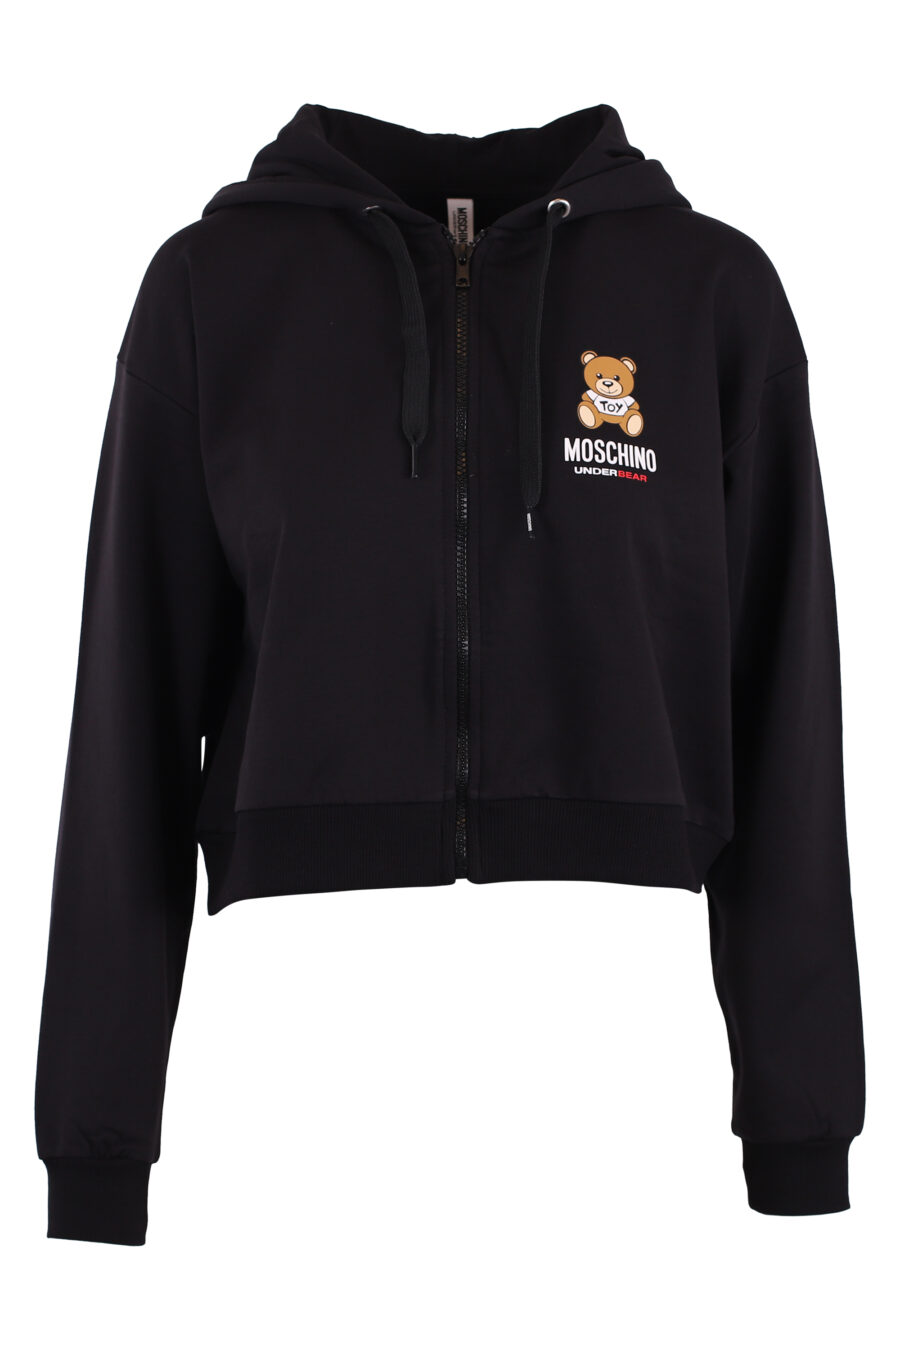 Black hooded sweatshirt with zip and bear logo "underbear" - IMG 6206